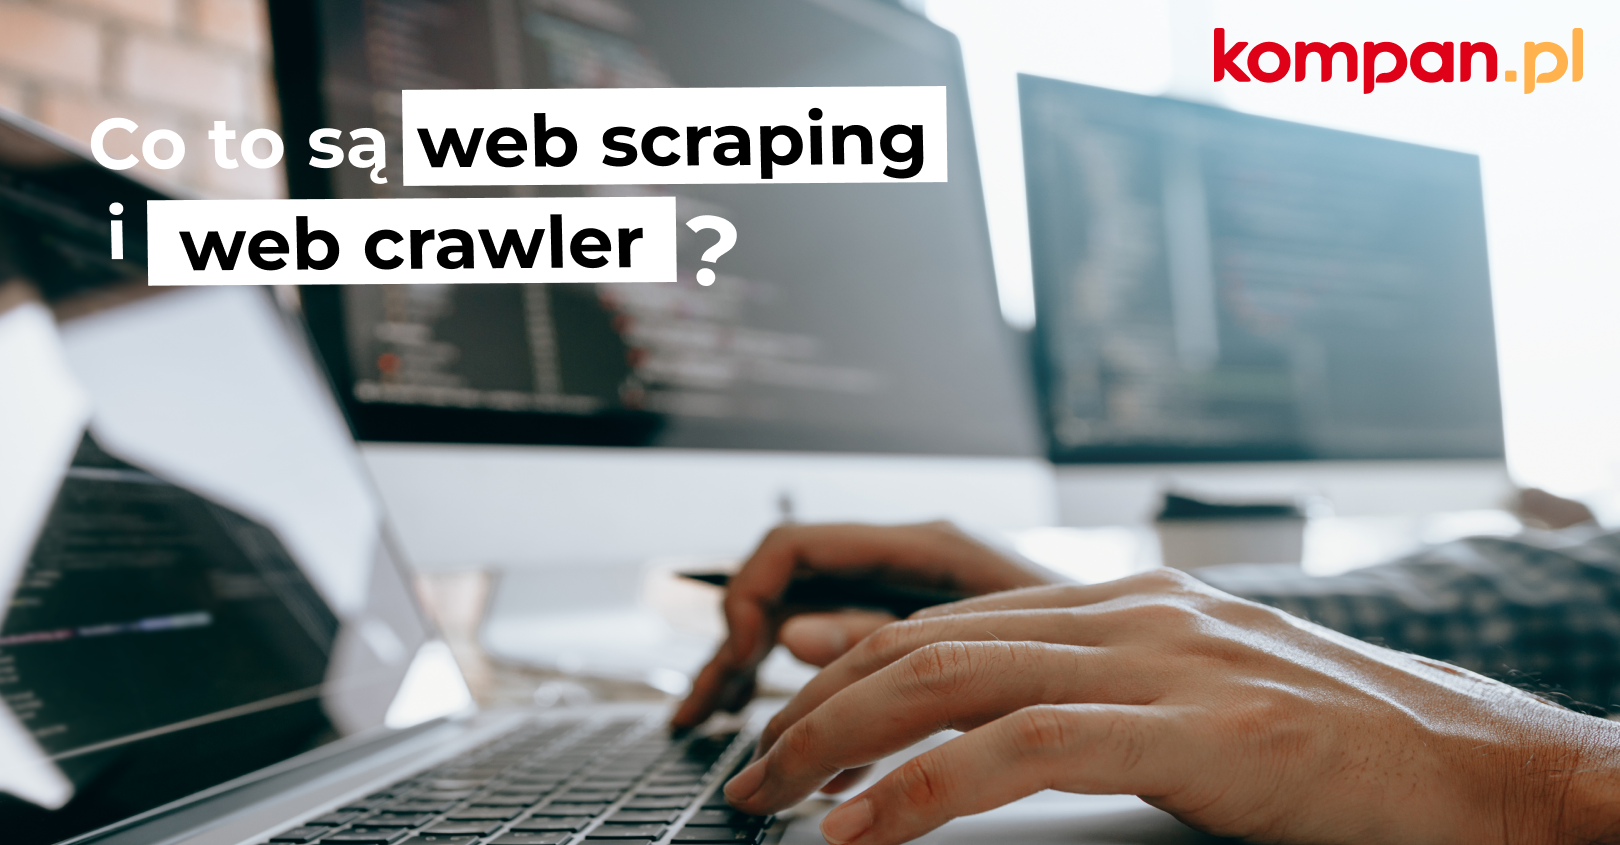 Co to są web scraping i web crawler?